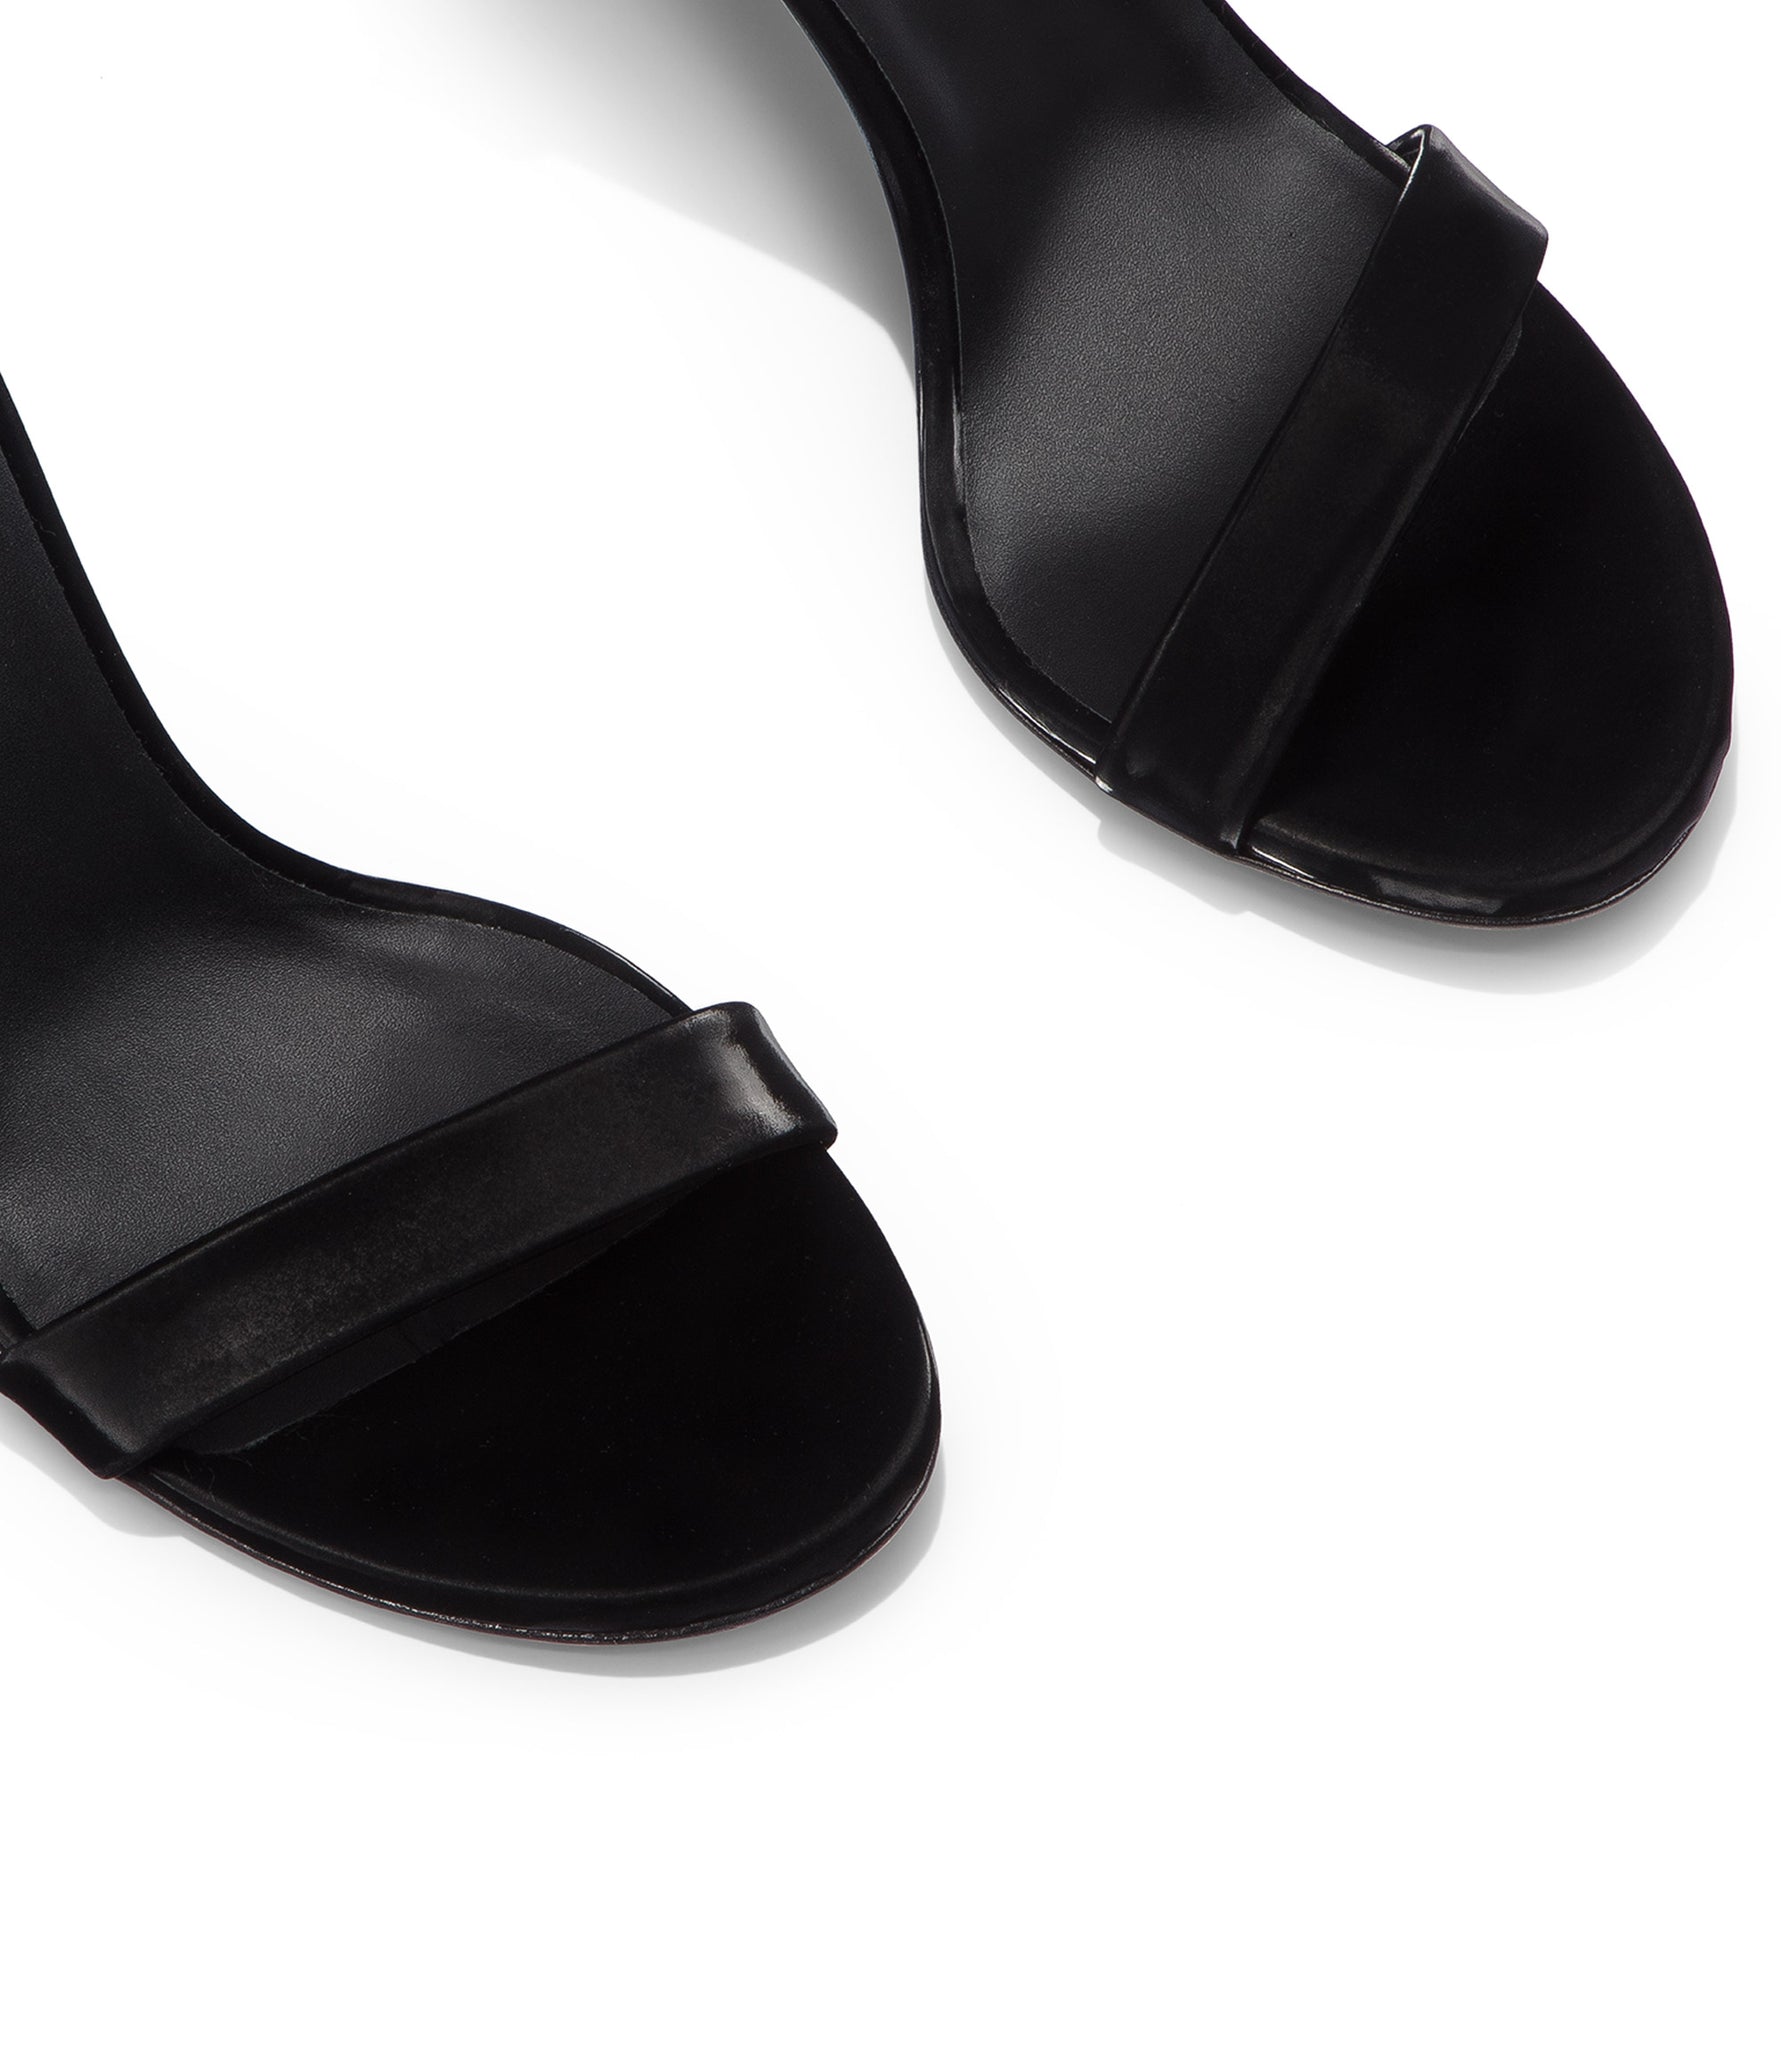 L-heel black faux leather jewel sandals